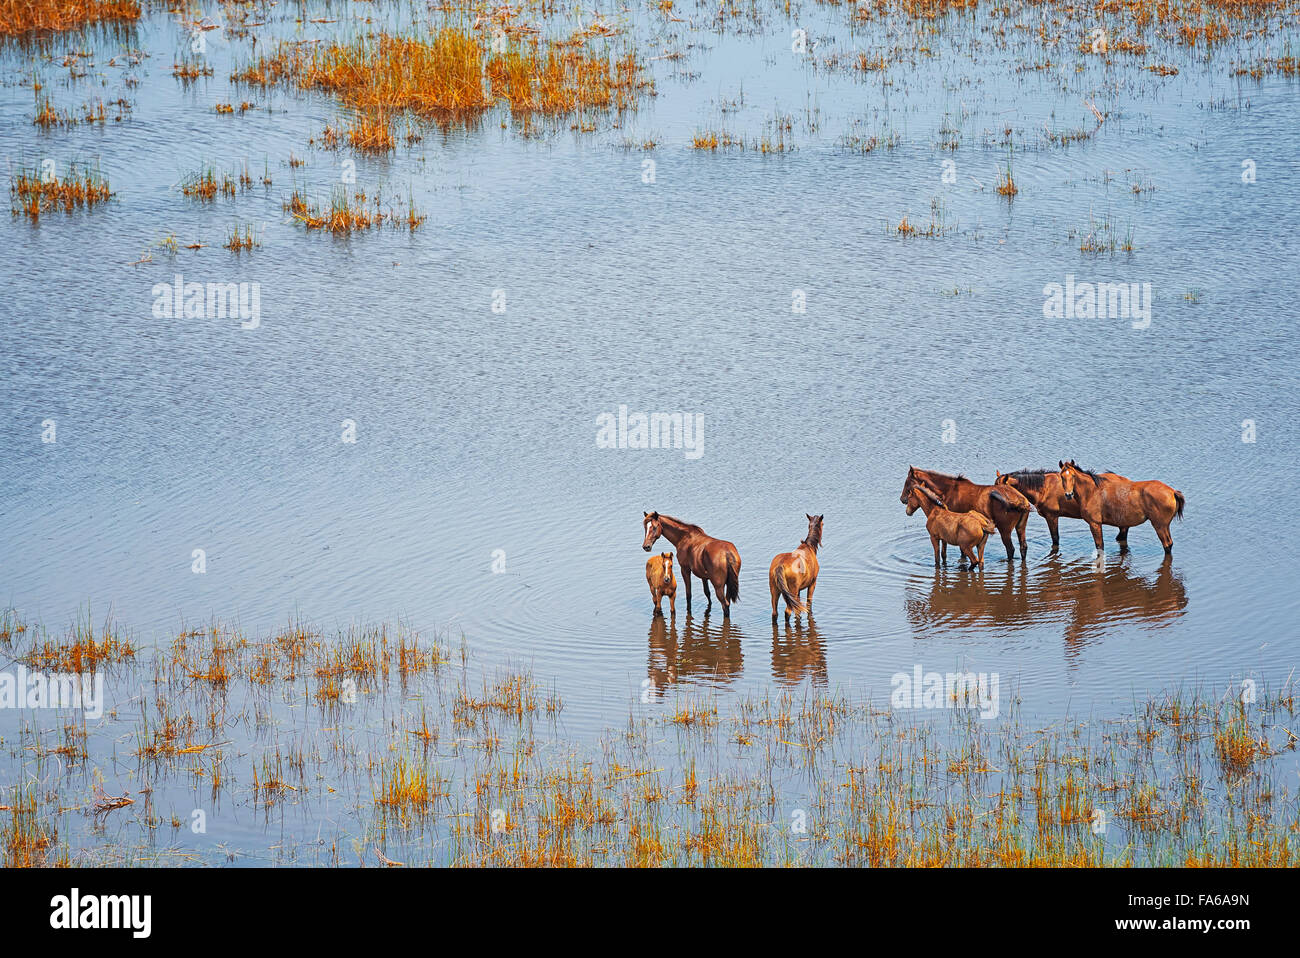 Wildpferde in einem nassen Feld, Broome, Australien Stockfoto